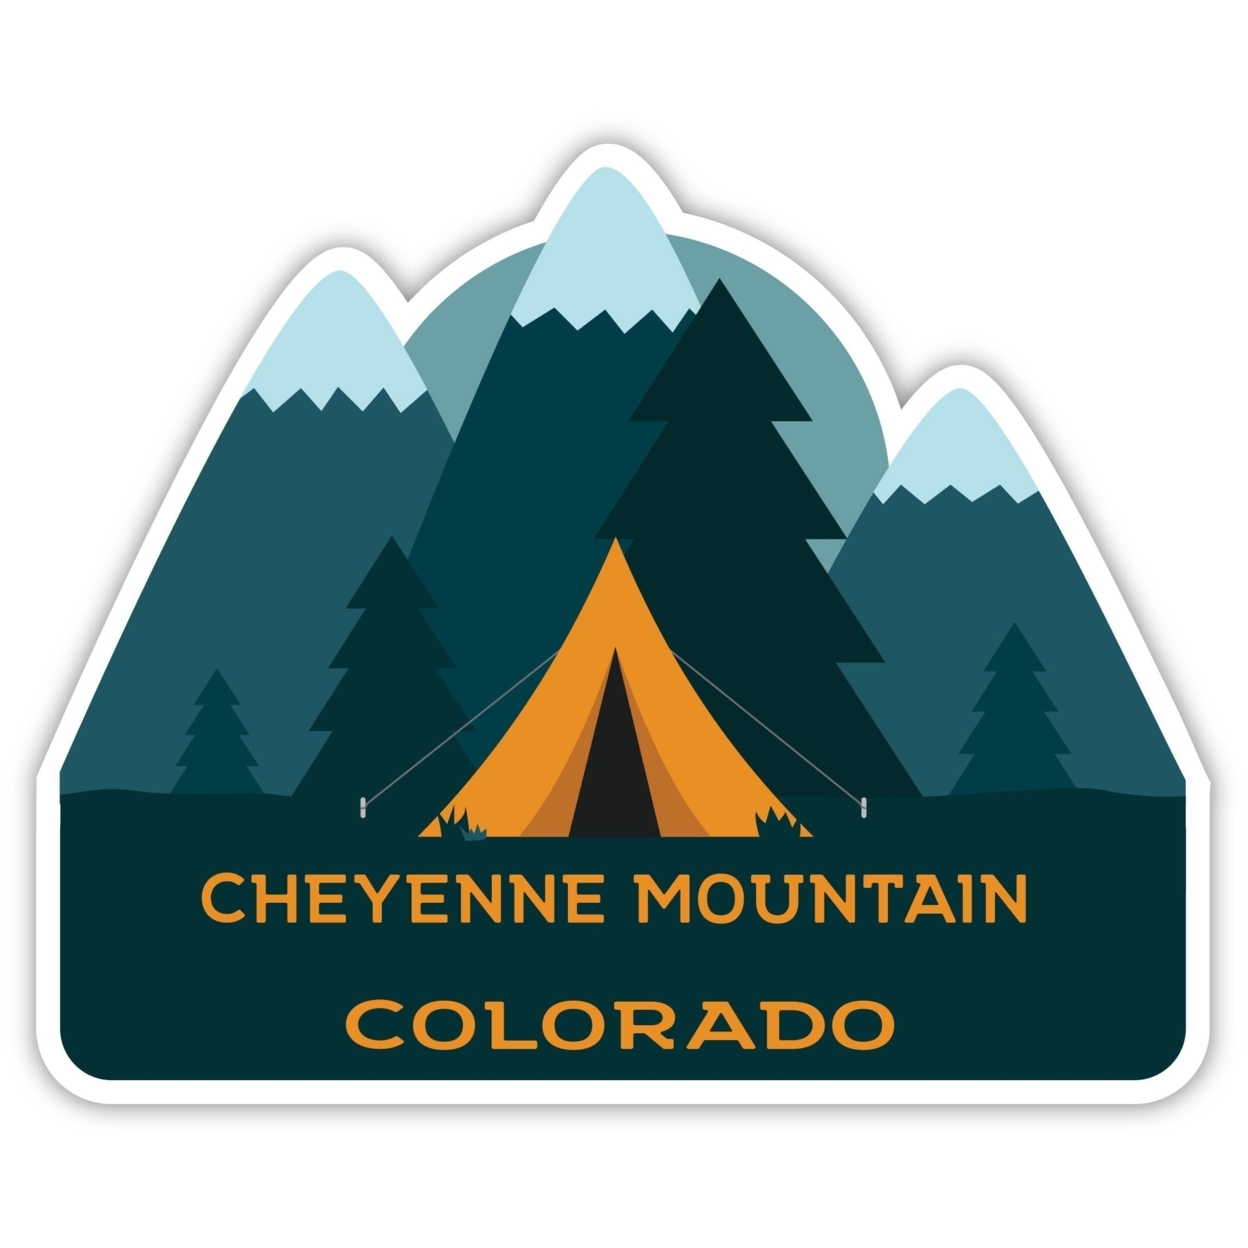 Cheyenne Mountain Colorado Souvenir Decorative Stickers (Choose Theme And Size) - 4-Pack, 12-Inch, Bear